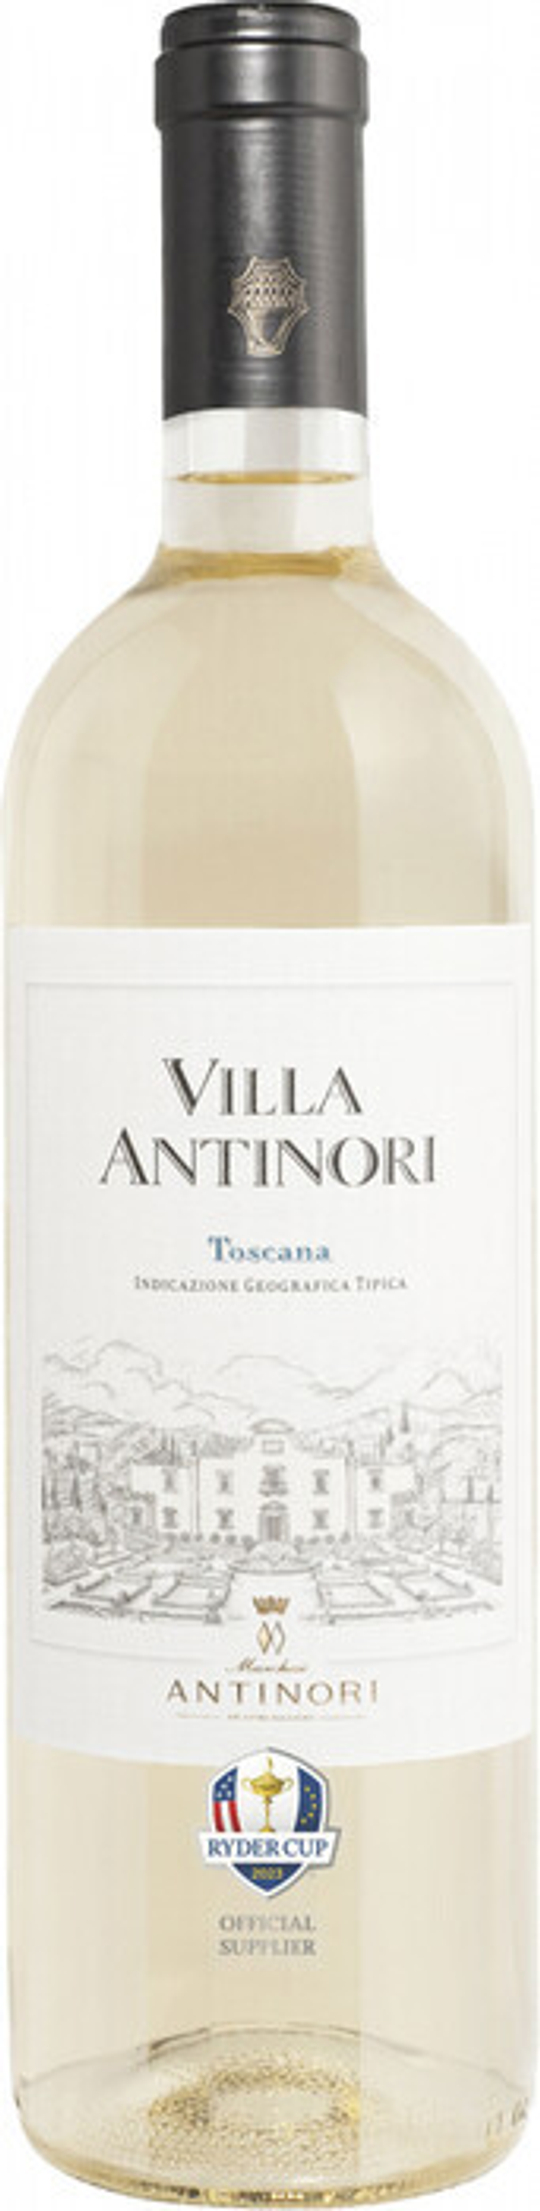 Вино Villa Antinori Bianco Toscana IGT, 0,75 л.